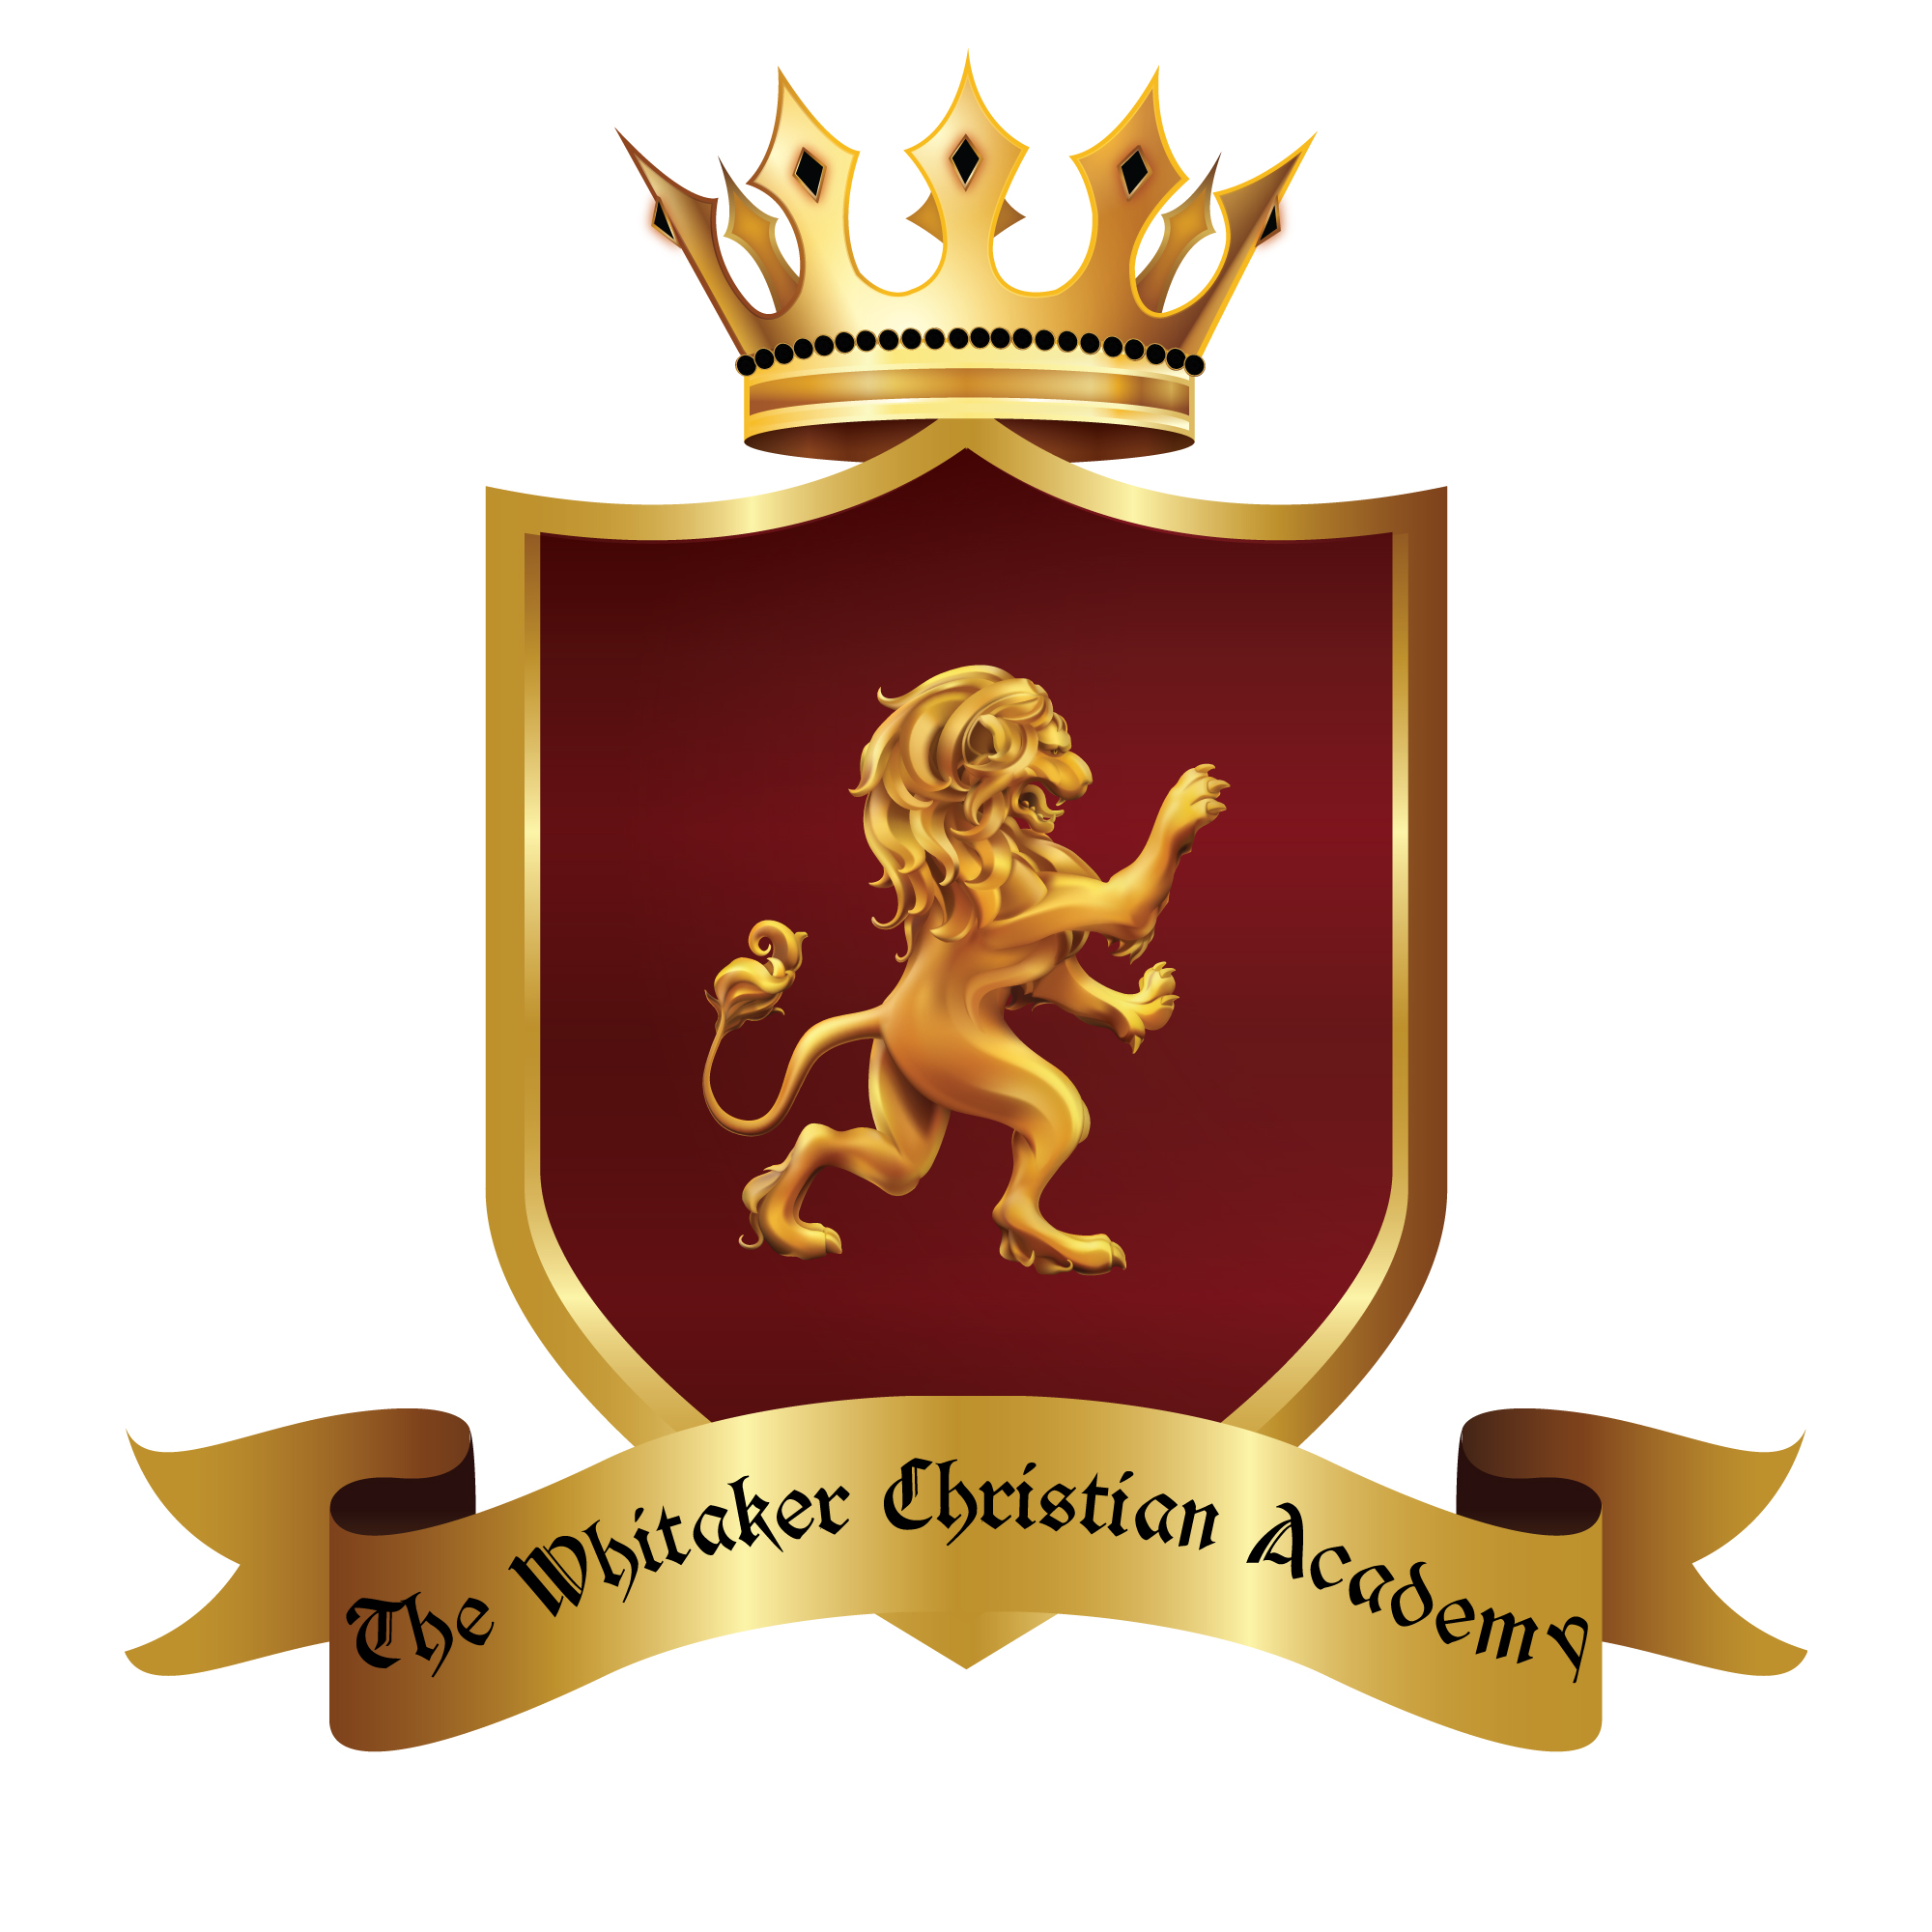 The Whitaker Christian Academy logo